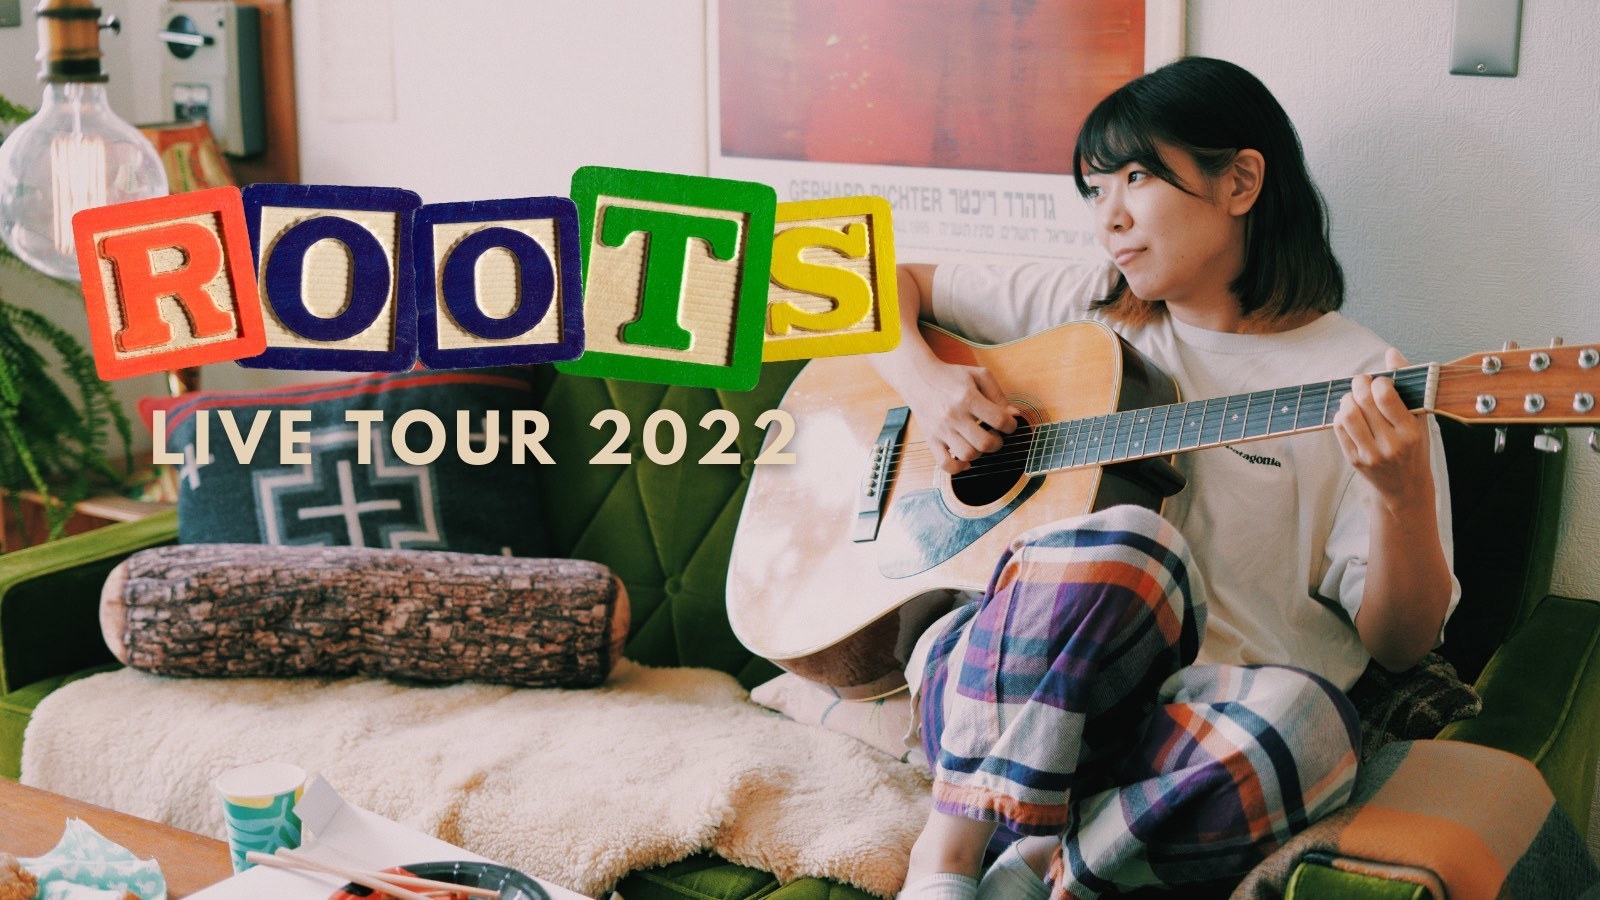 Live tour 2022